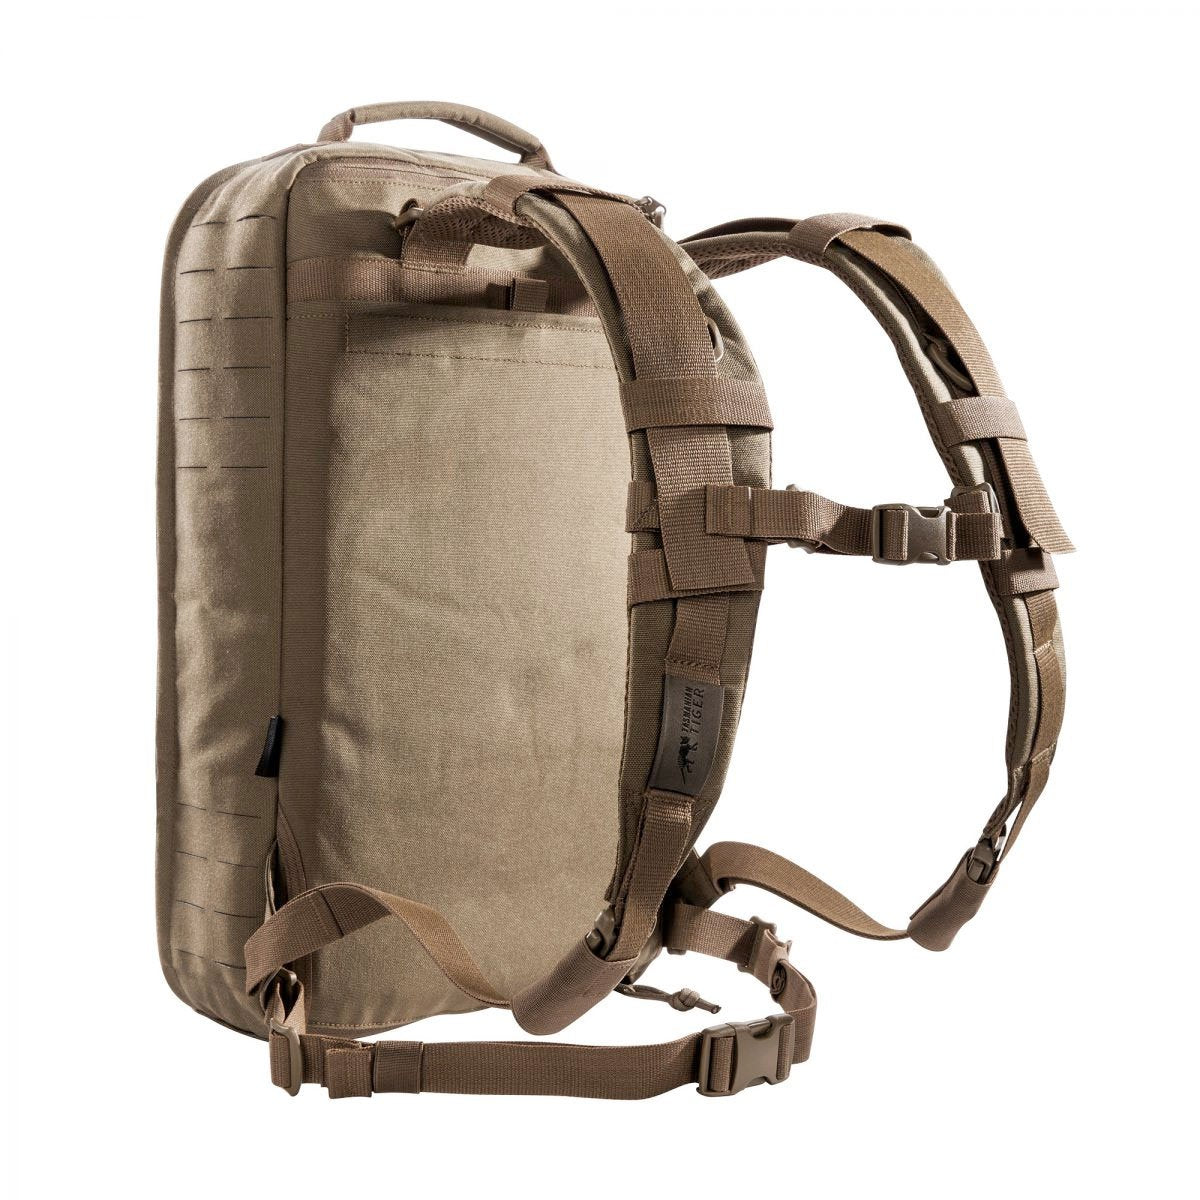 Tasmanian Medic Assault Pack Large MKII Backpack 19 Liter Coyote Brown Backpacks Tasmanian Tiger Tactical Gear Supplier Tactical Distributors Australia